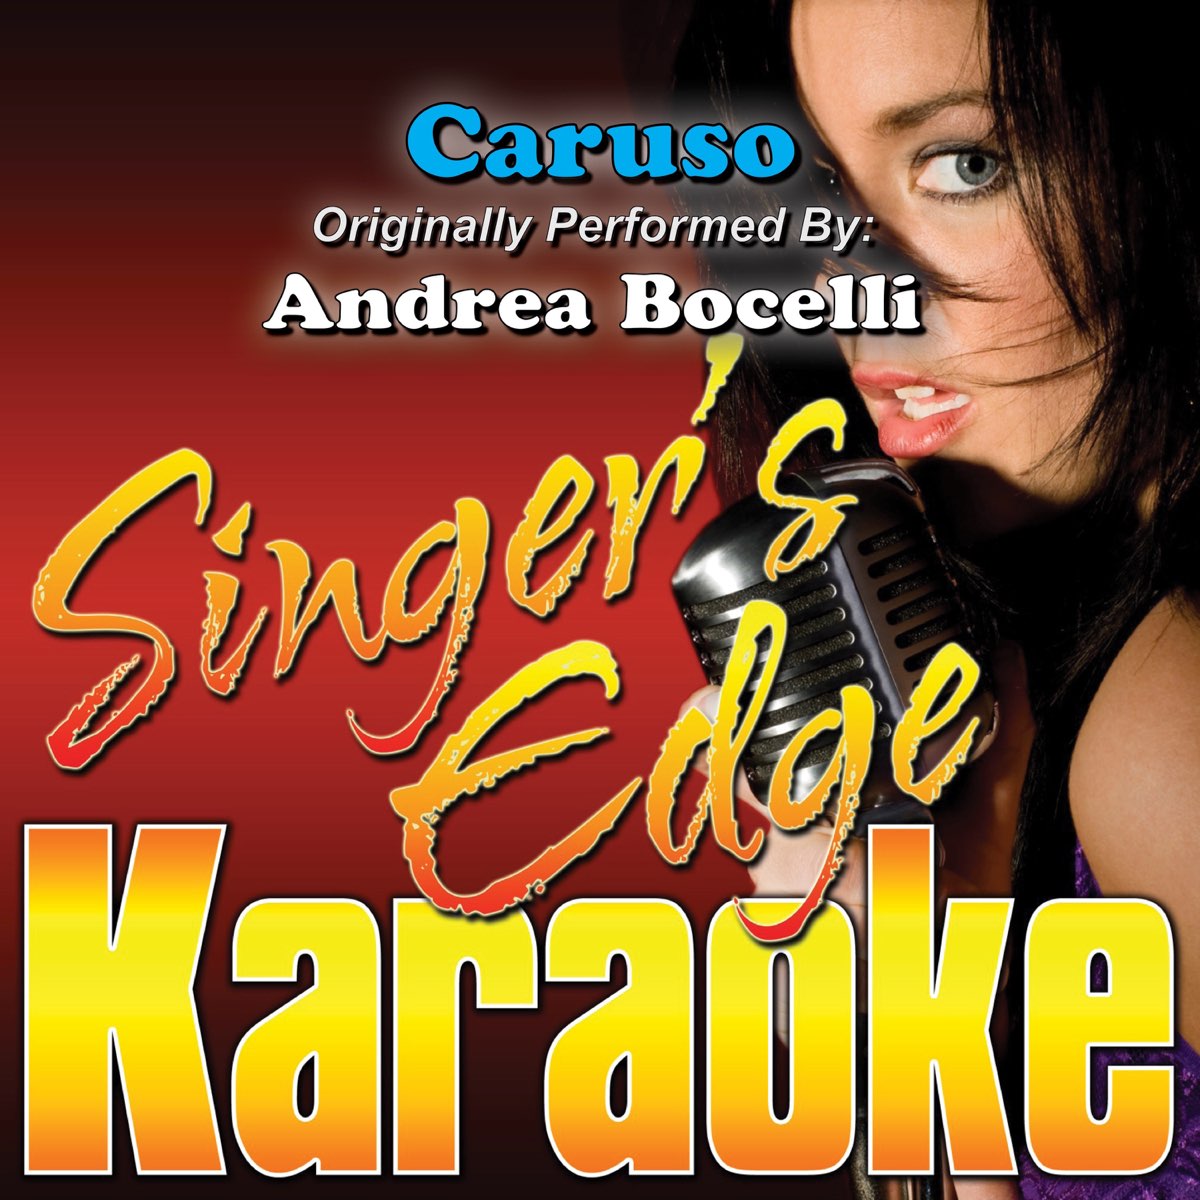 Caruso (Originally Performed By Andrea Bocelli) [Instrumental] - Single -  Album by Singer's Edge Karaoke - Apple Music